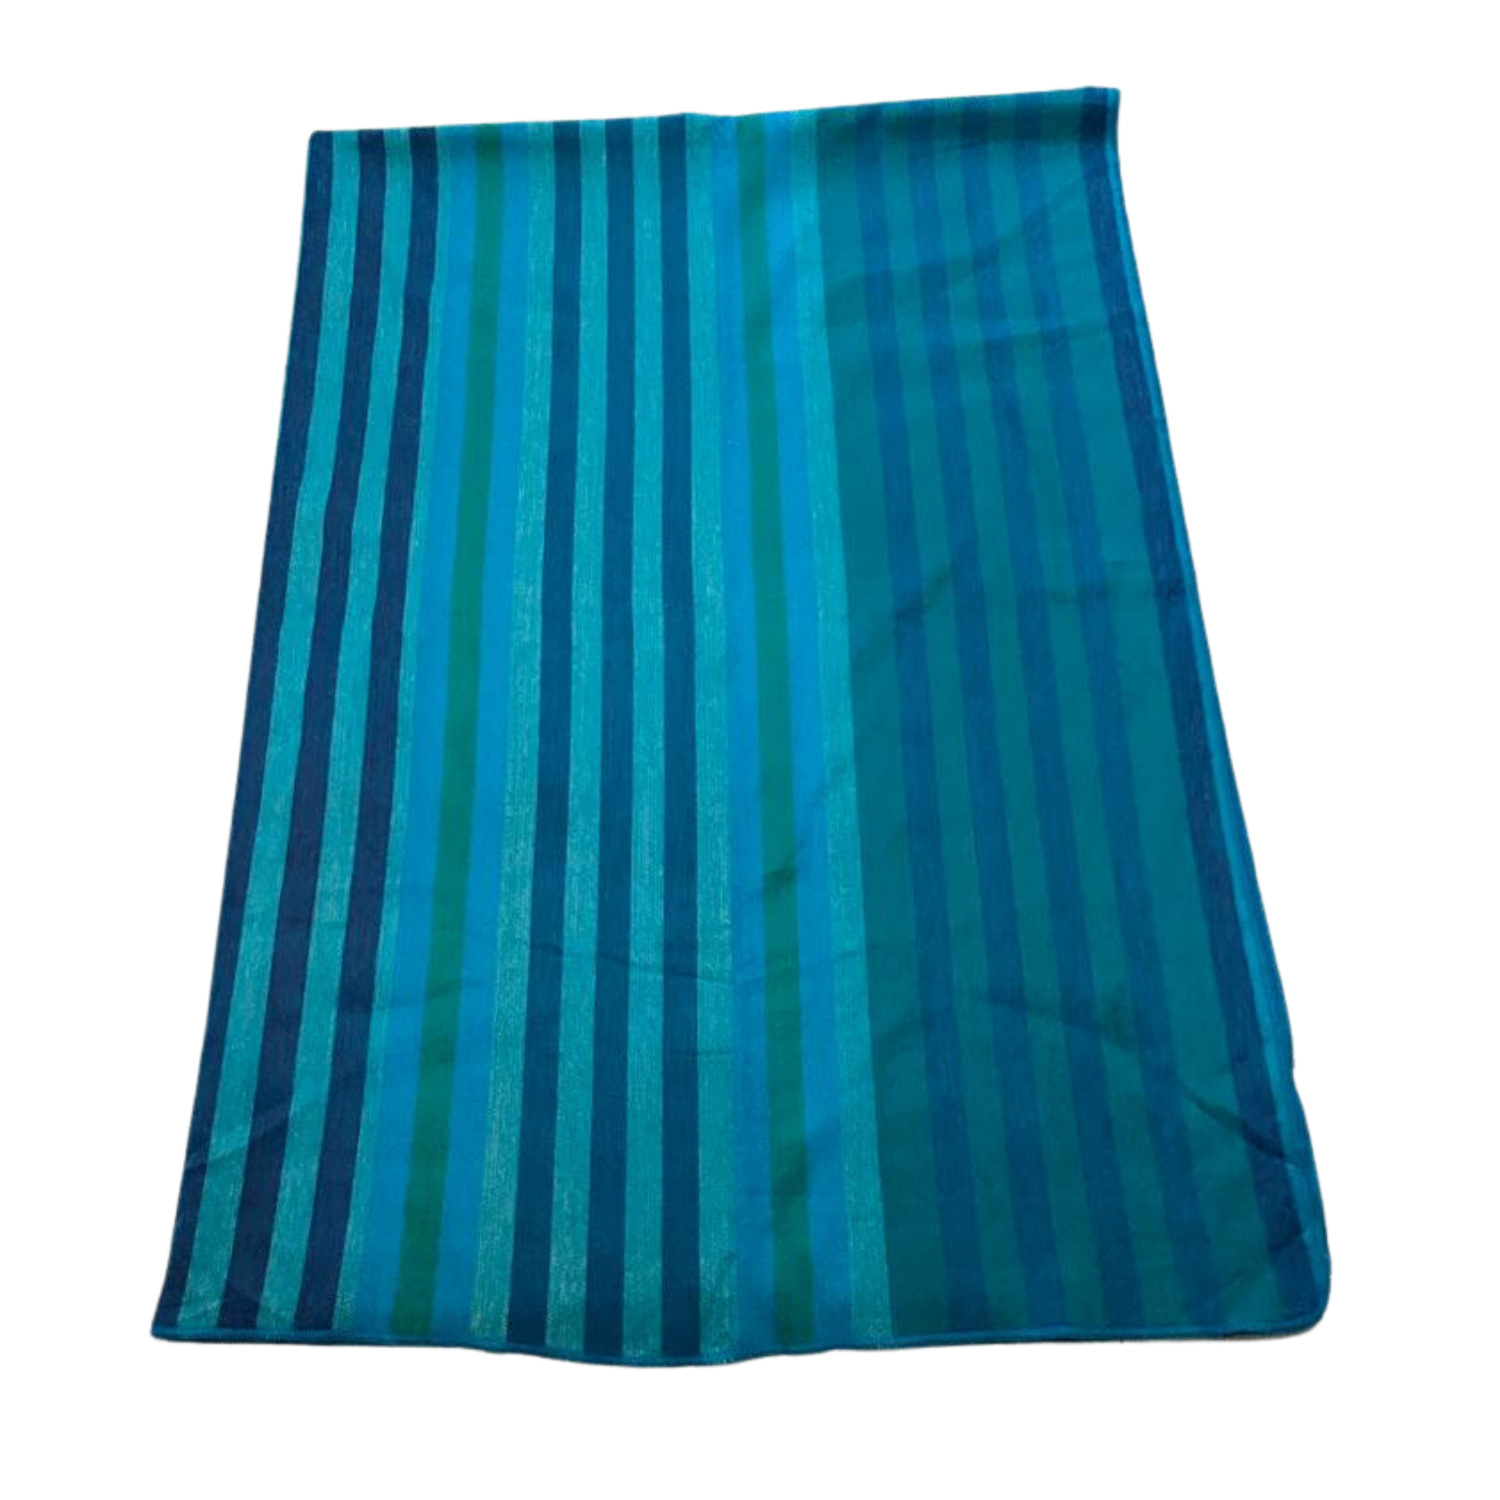 Boho Chic Luxury Blue Striped Alpaca Fiber Blanket